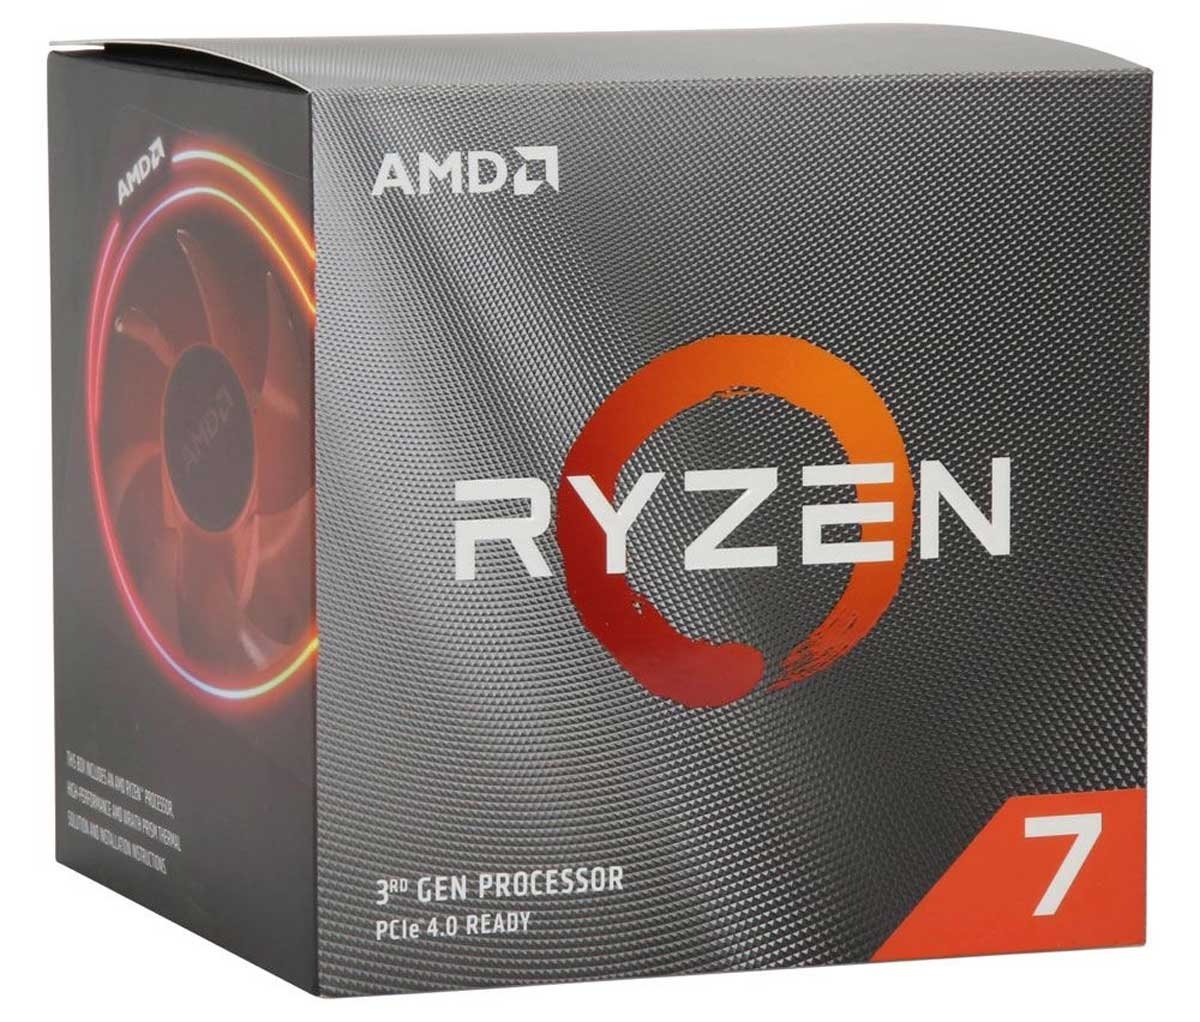 Micro Center deal knocks $70 off AMD Ryzen 7 3700X